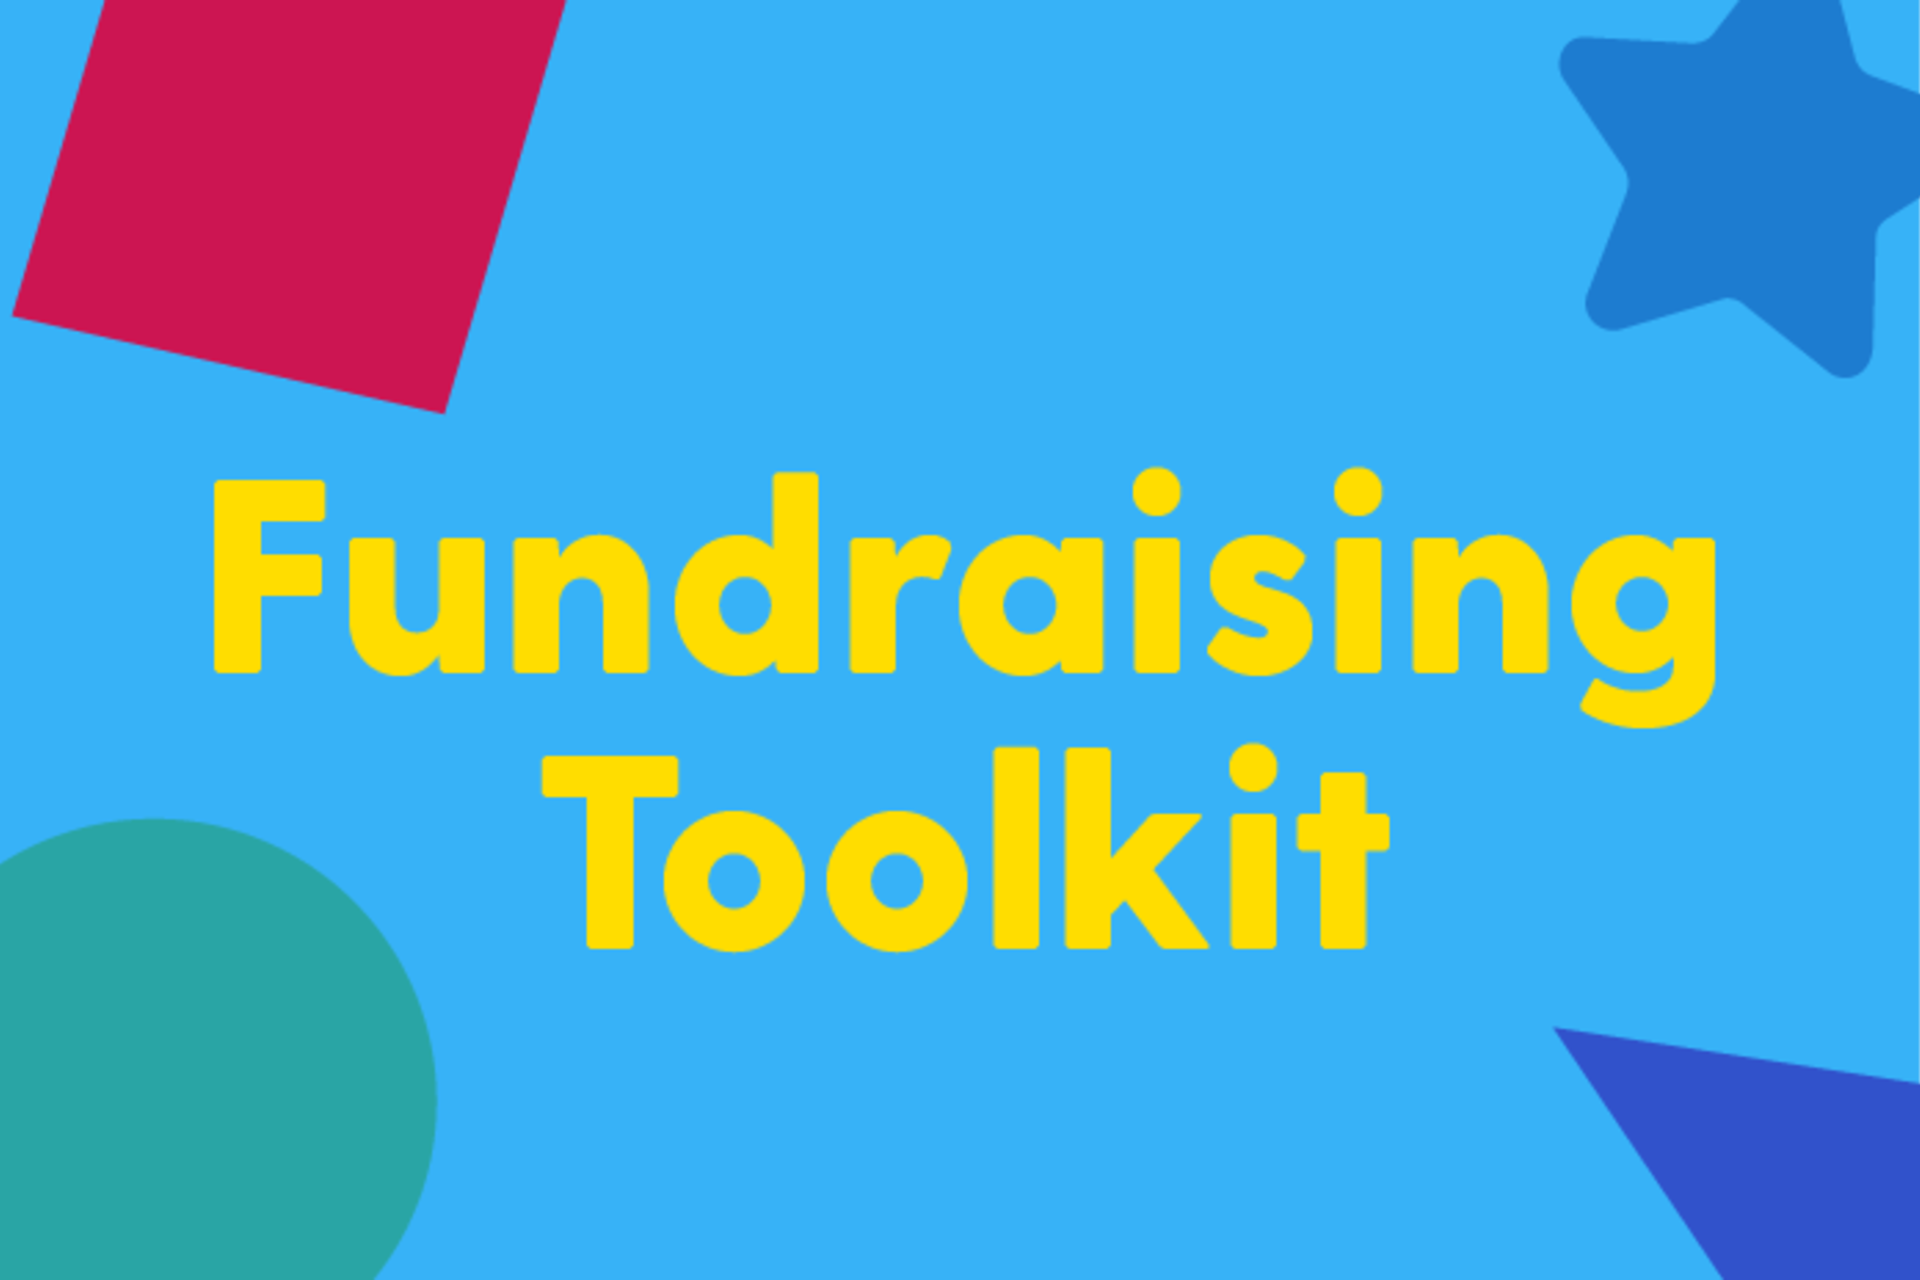 Fundraising toolkit